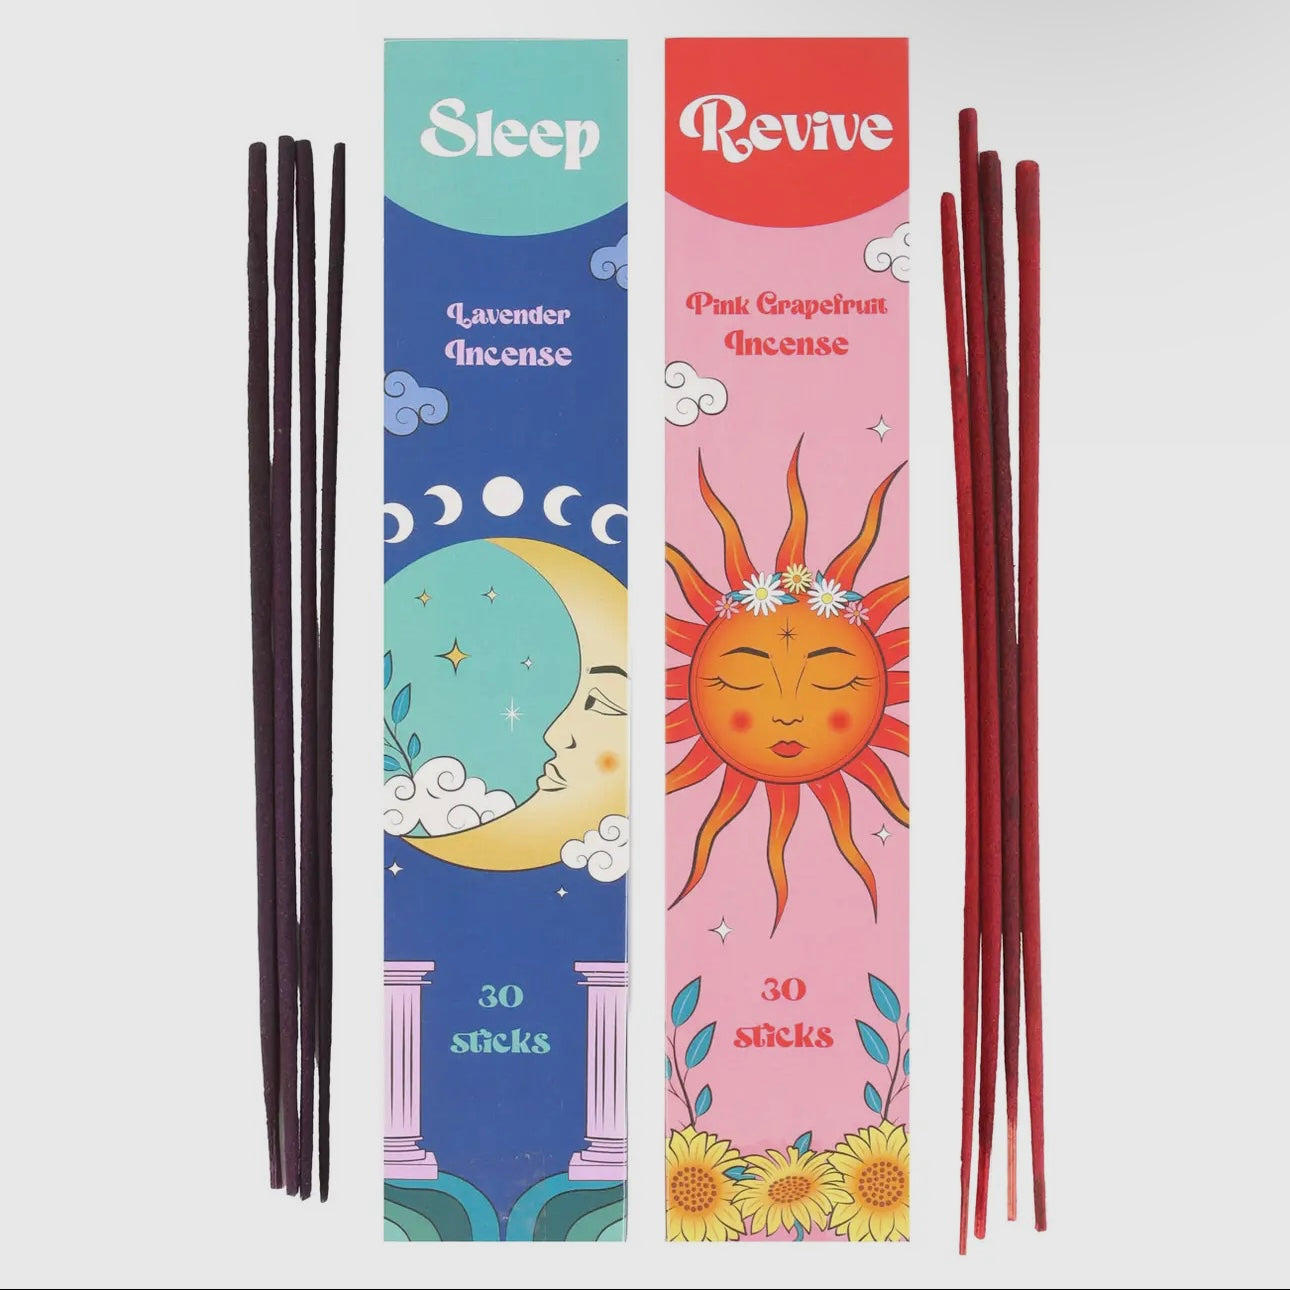 Celestial Sleep & Revive Incense Stick Sets